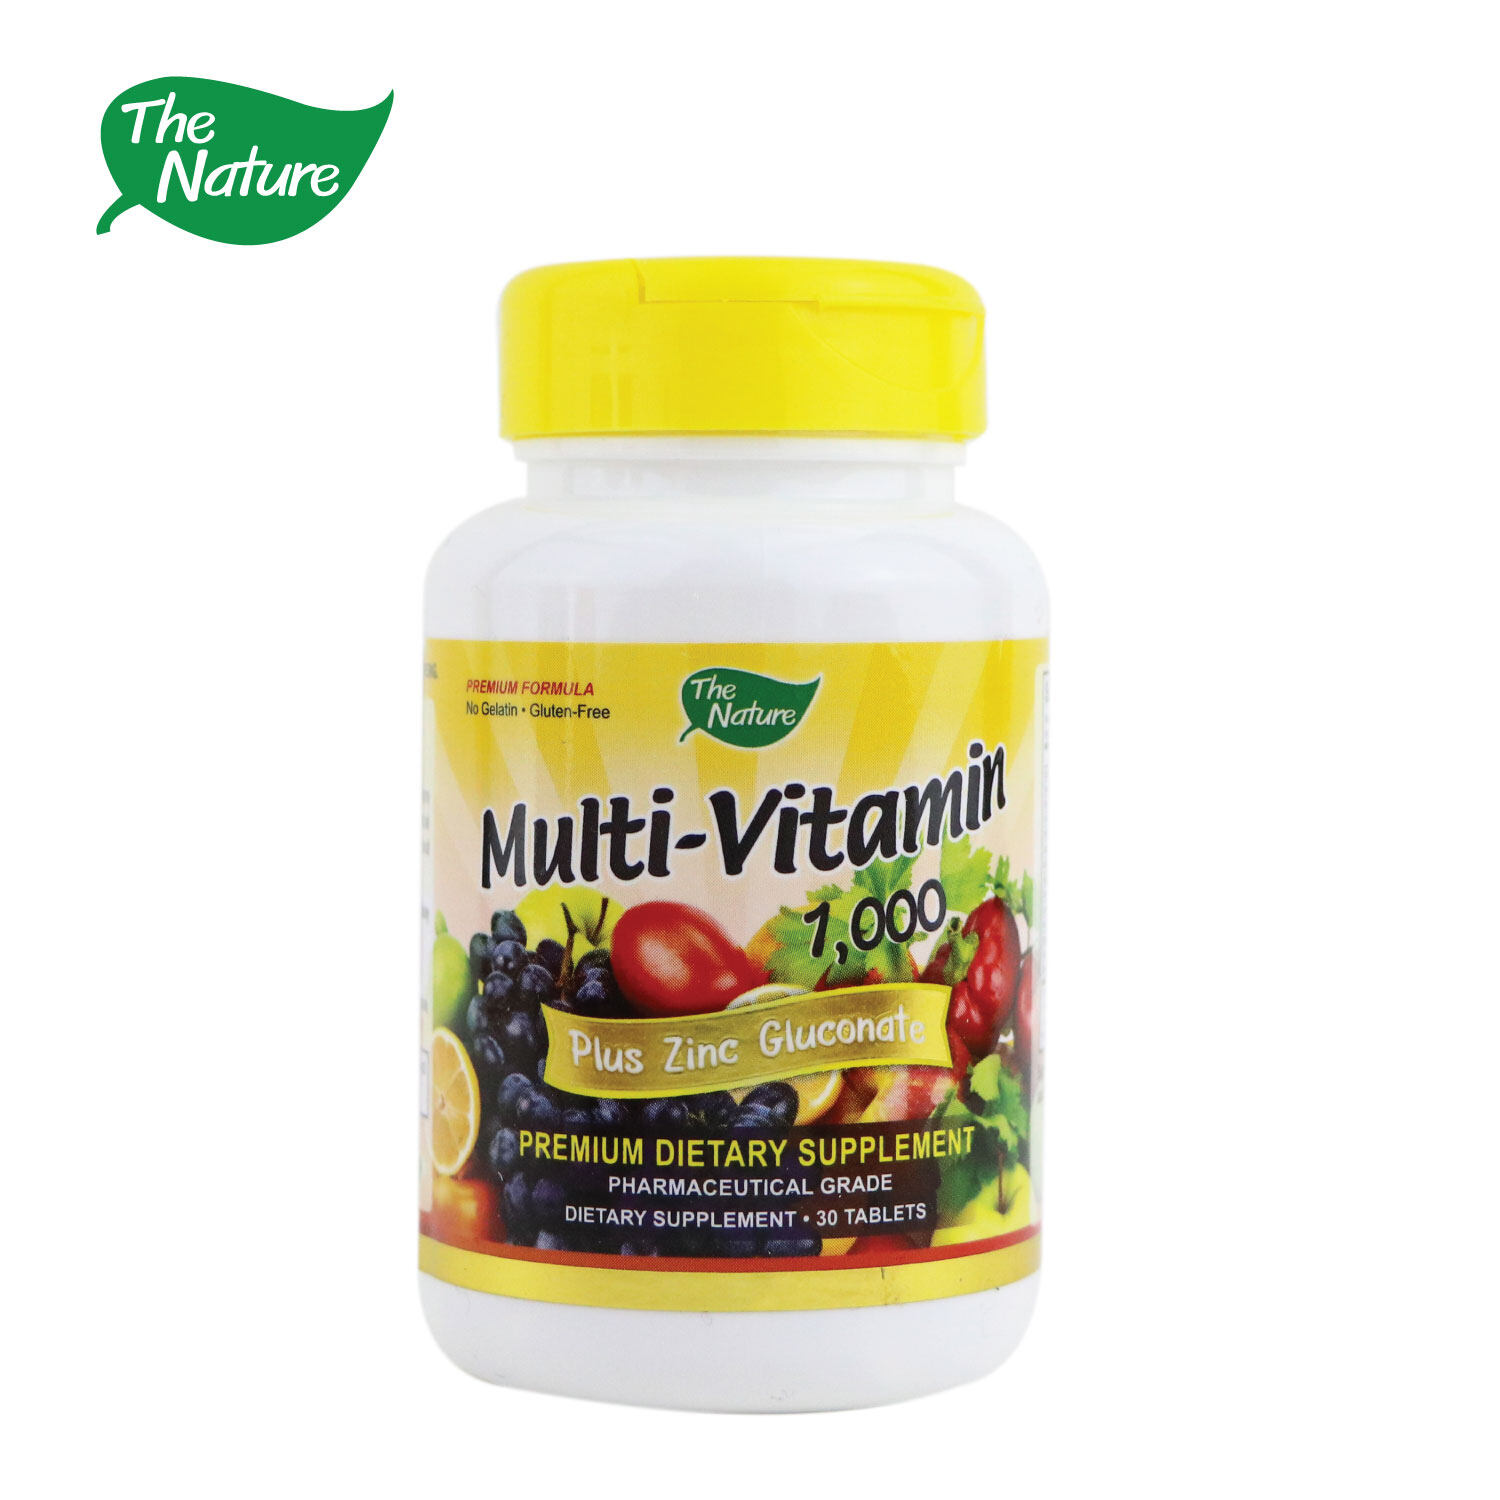 Multi Vitamin Plus Zinc Gluconate The Nature Multivitamin วิตามินรวม พลัส ซิงค์ กลูโคเนต x 1 ขวด มัลติวิตามิน วิตามินรวม เดอะ เนเจอร์